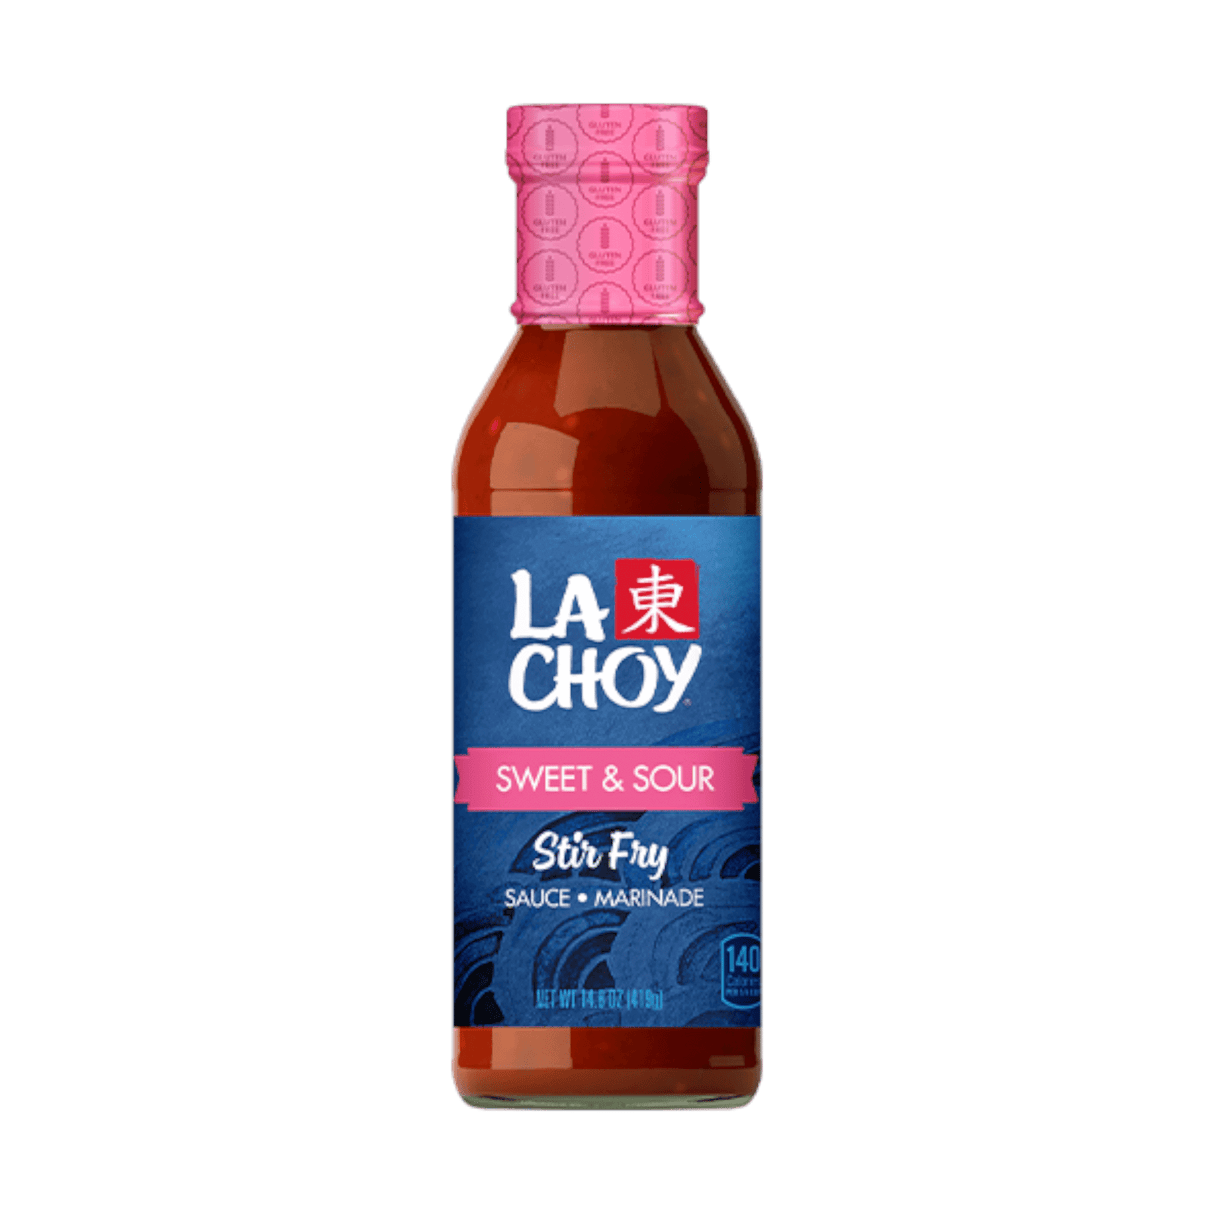 La Choy Sweet & Sour Stir Fry Sauce & Marinade